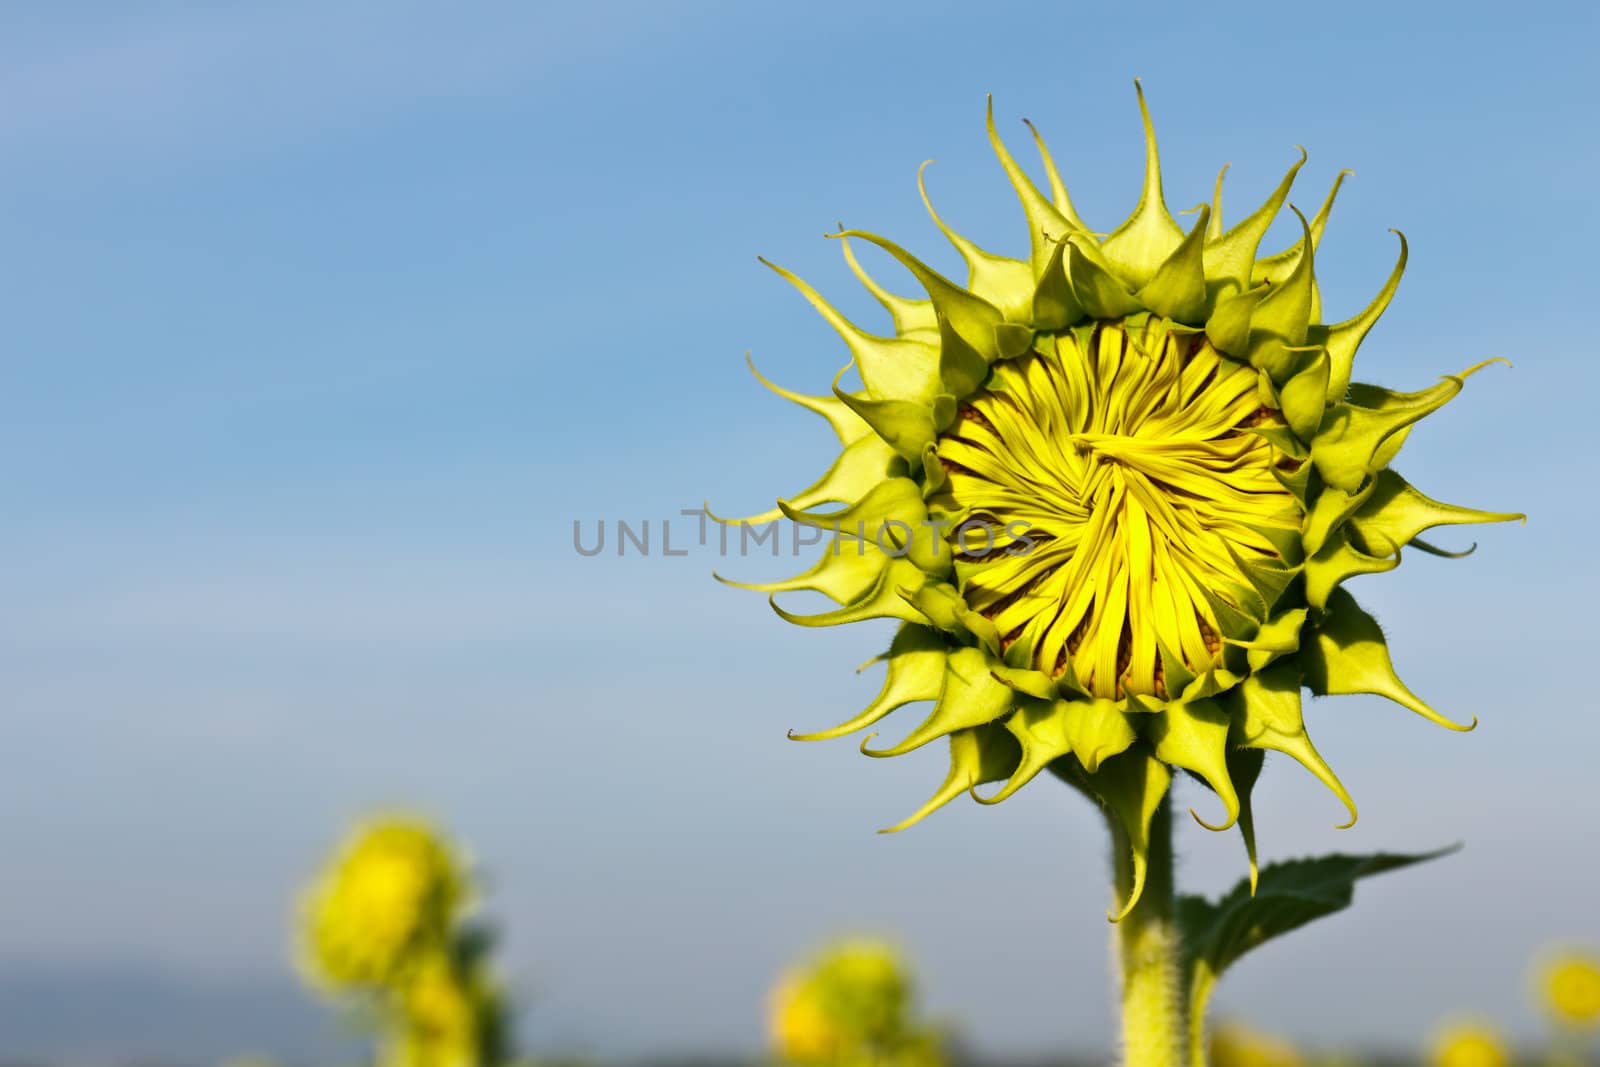 Sunflower and blue sky by stoonn